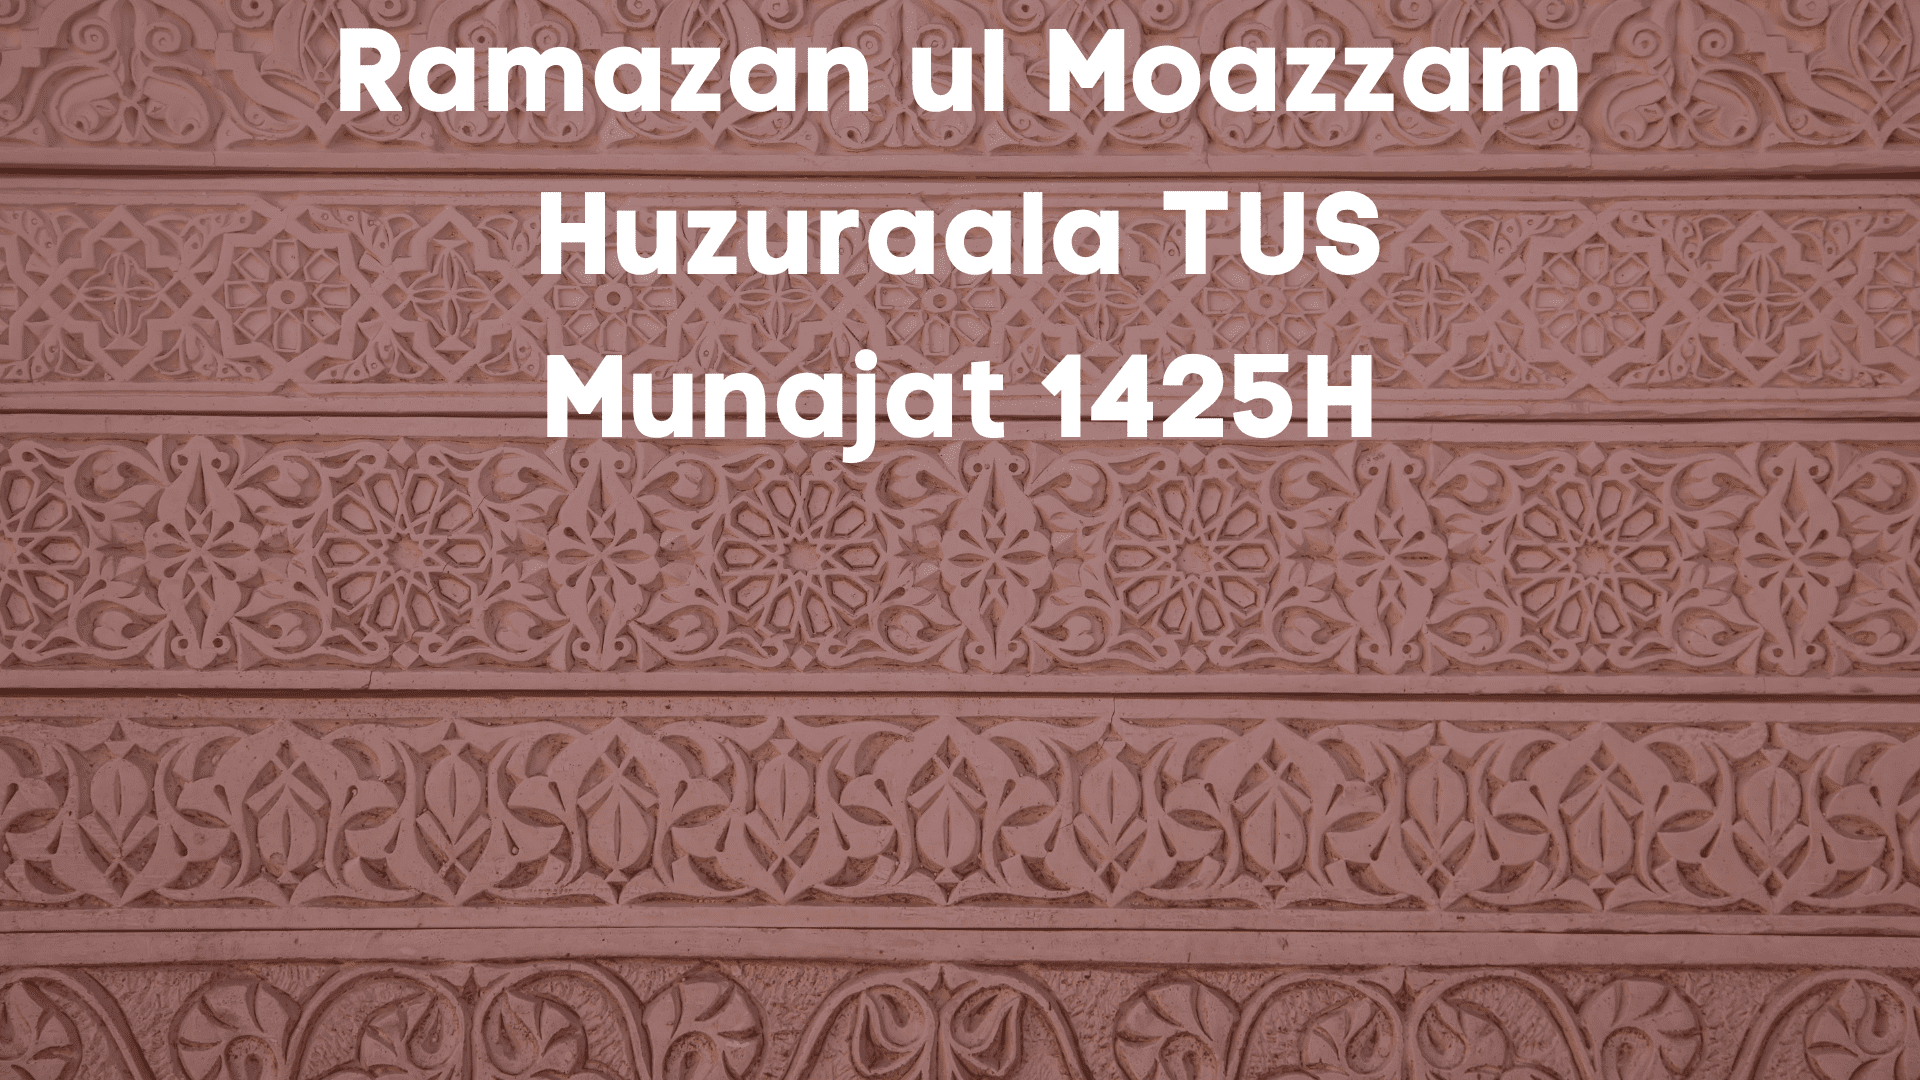 Ramazan ul Moazzam Huzuraala TUS 1425H Munajat